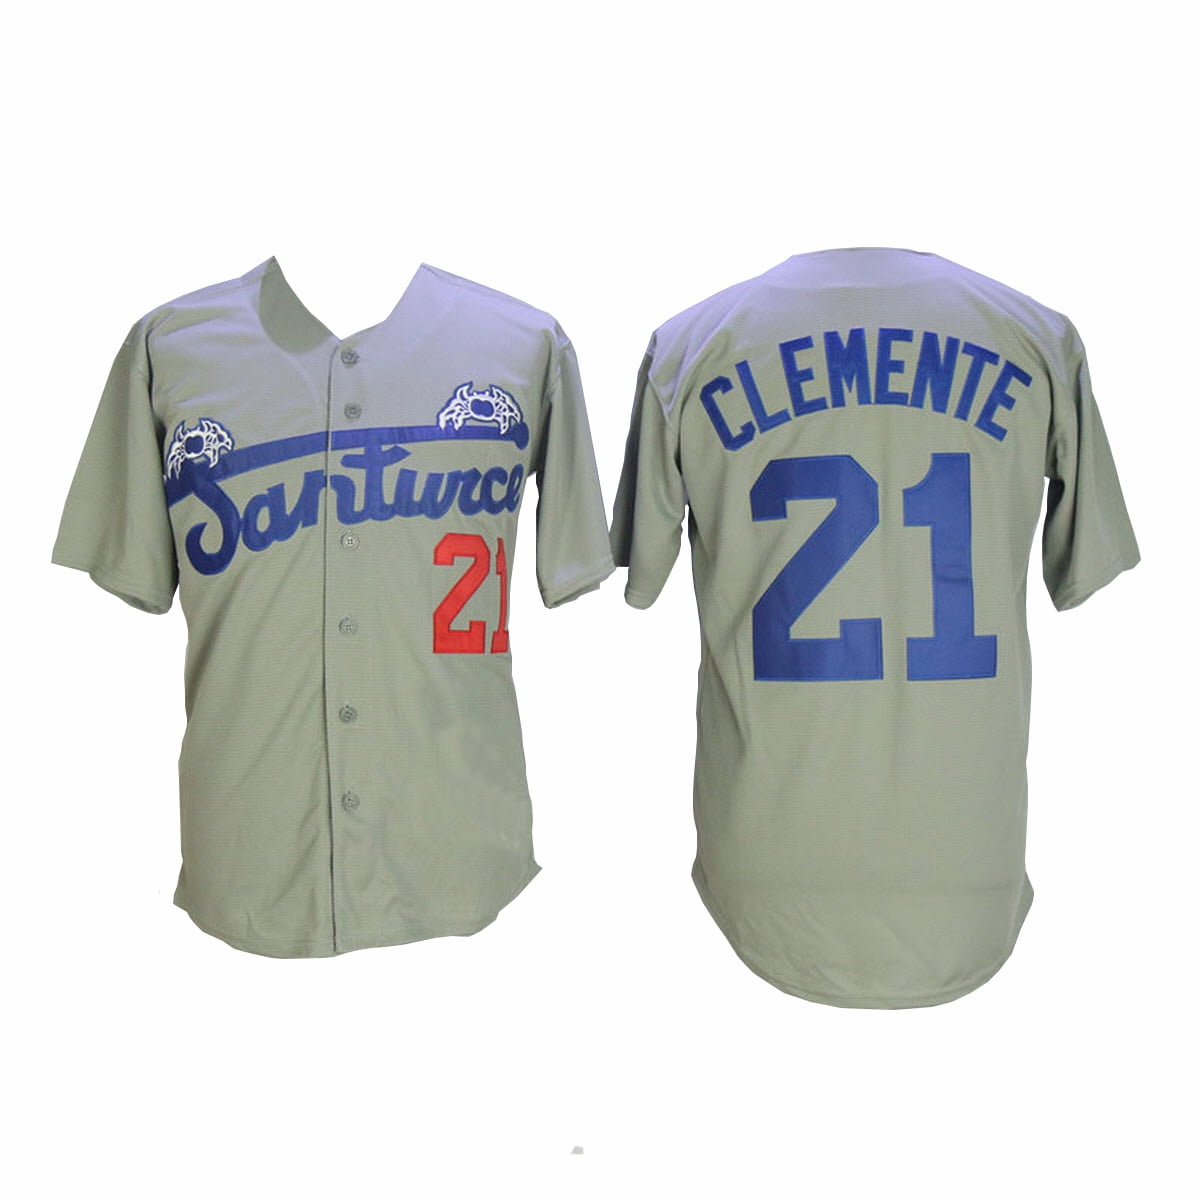 Roberto Clemente 21 Santurce Crabbers Baseball Jersey Gray Uniform